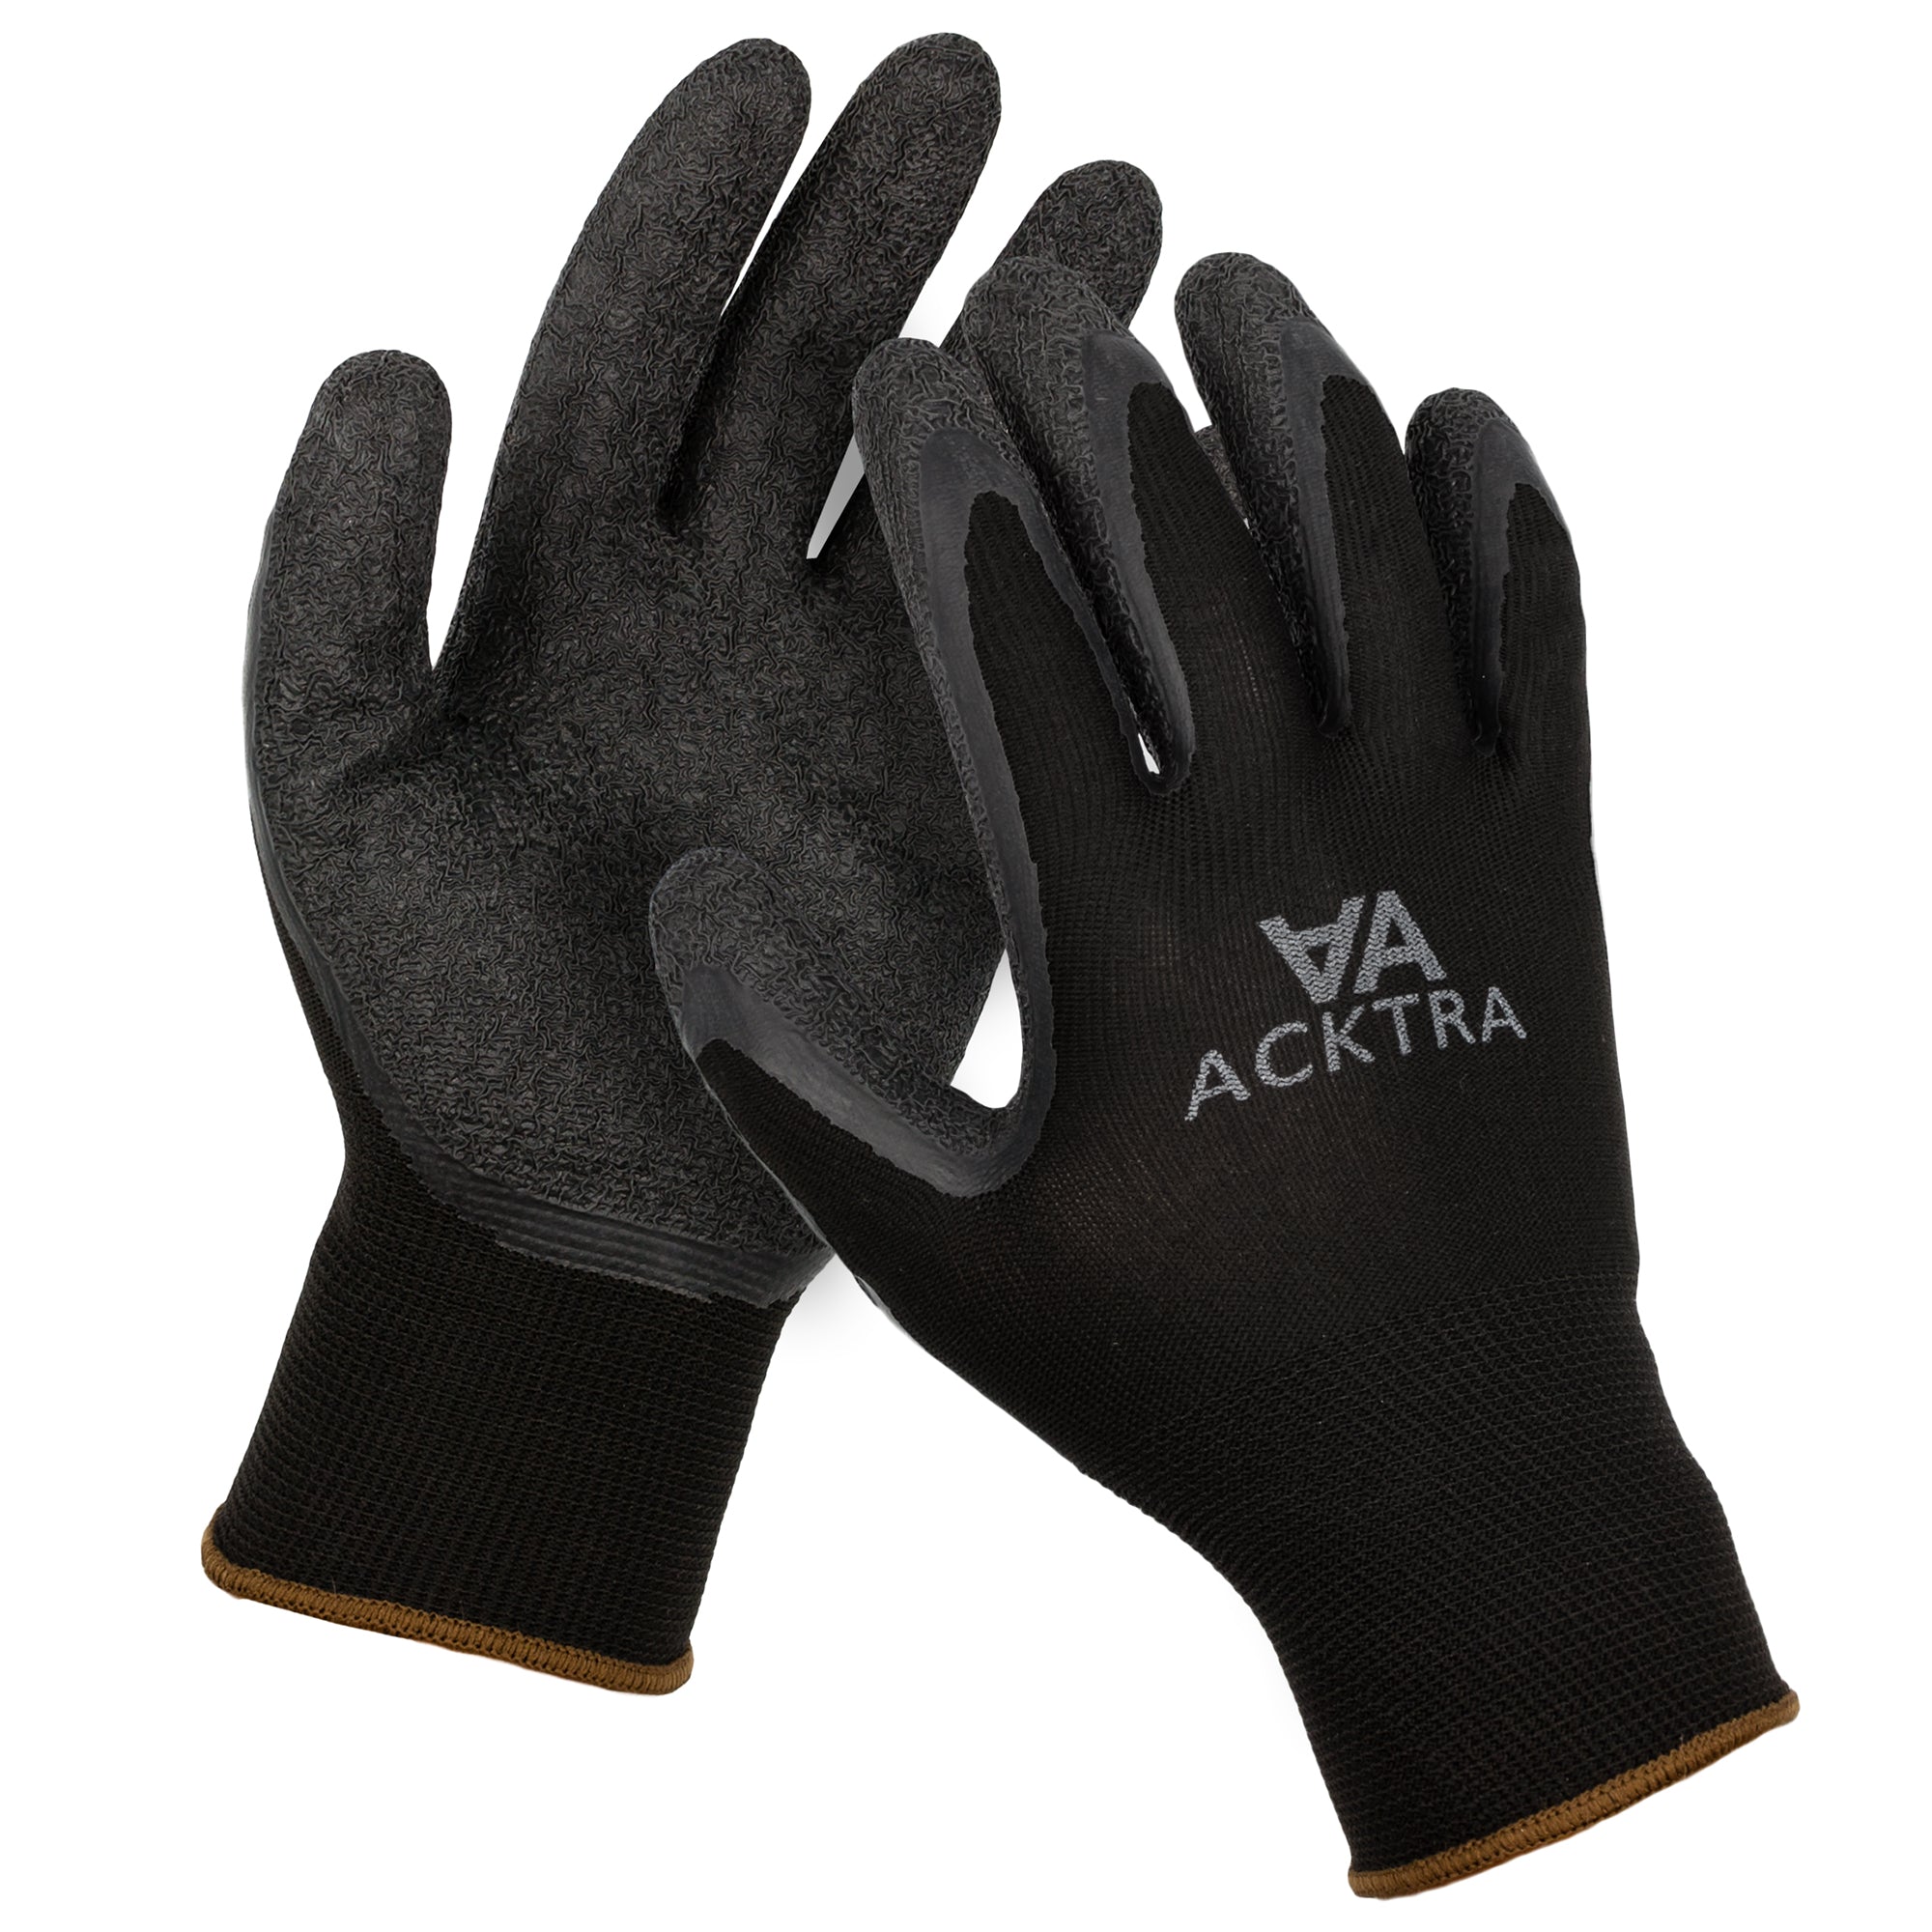 ACKTRA Nitrile Coated Nylon WORK GLOVES 12 Pairs / Dozen, Knit Wrist Cuff,  Multipurpose, for Men & Women, Red Grey Yellow, Small Medium Large, WG003 –  Acktra